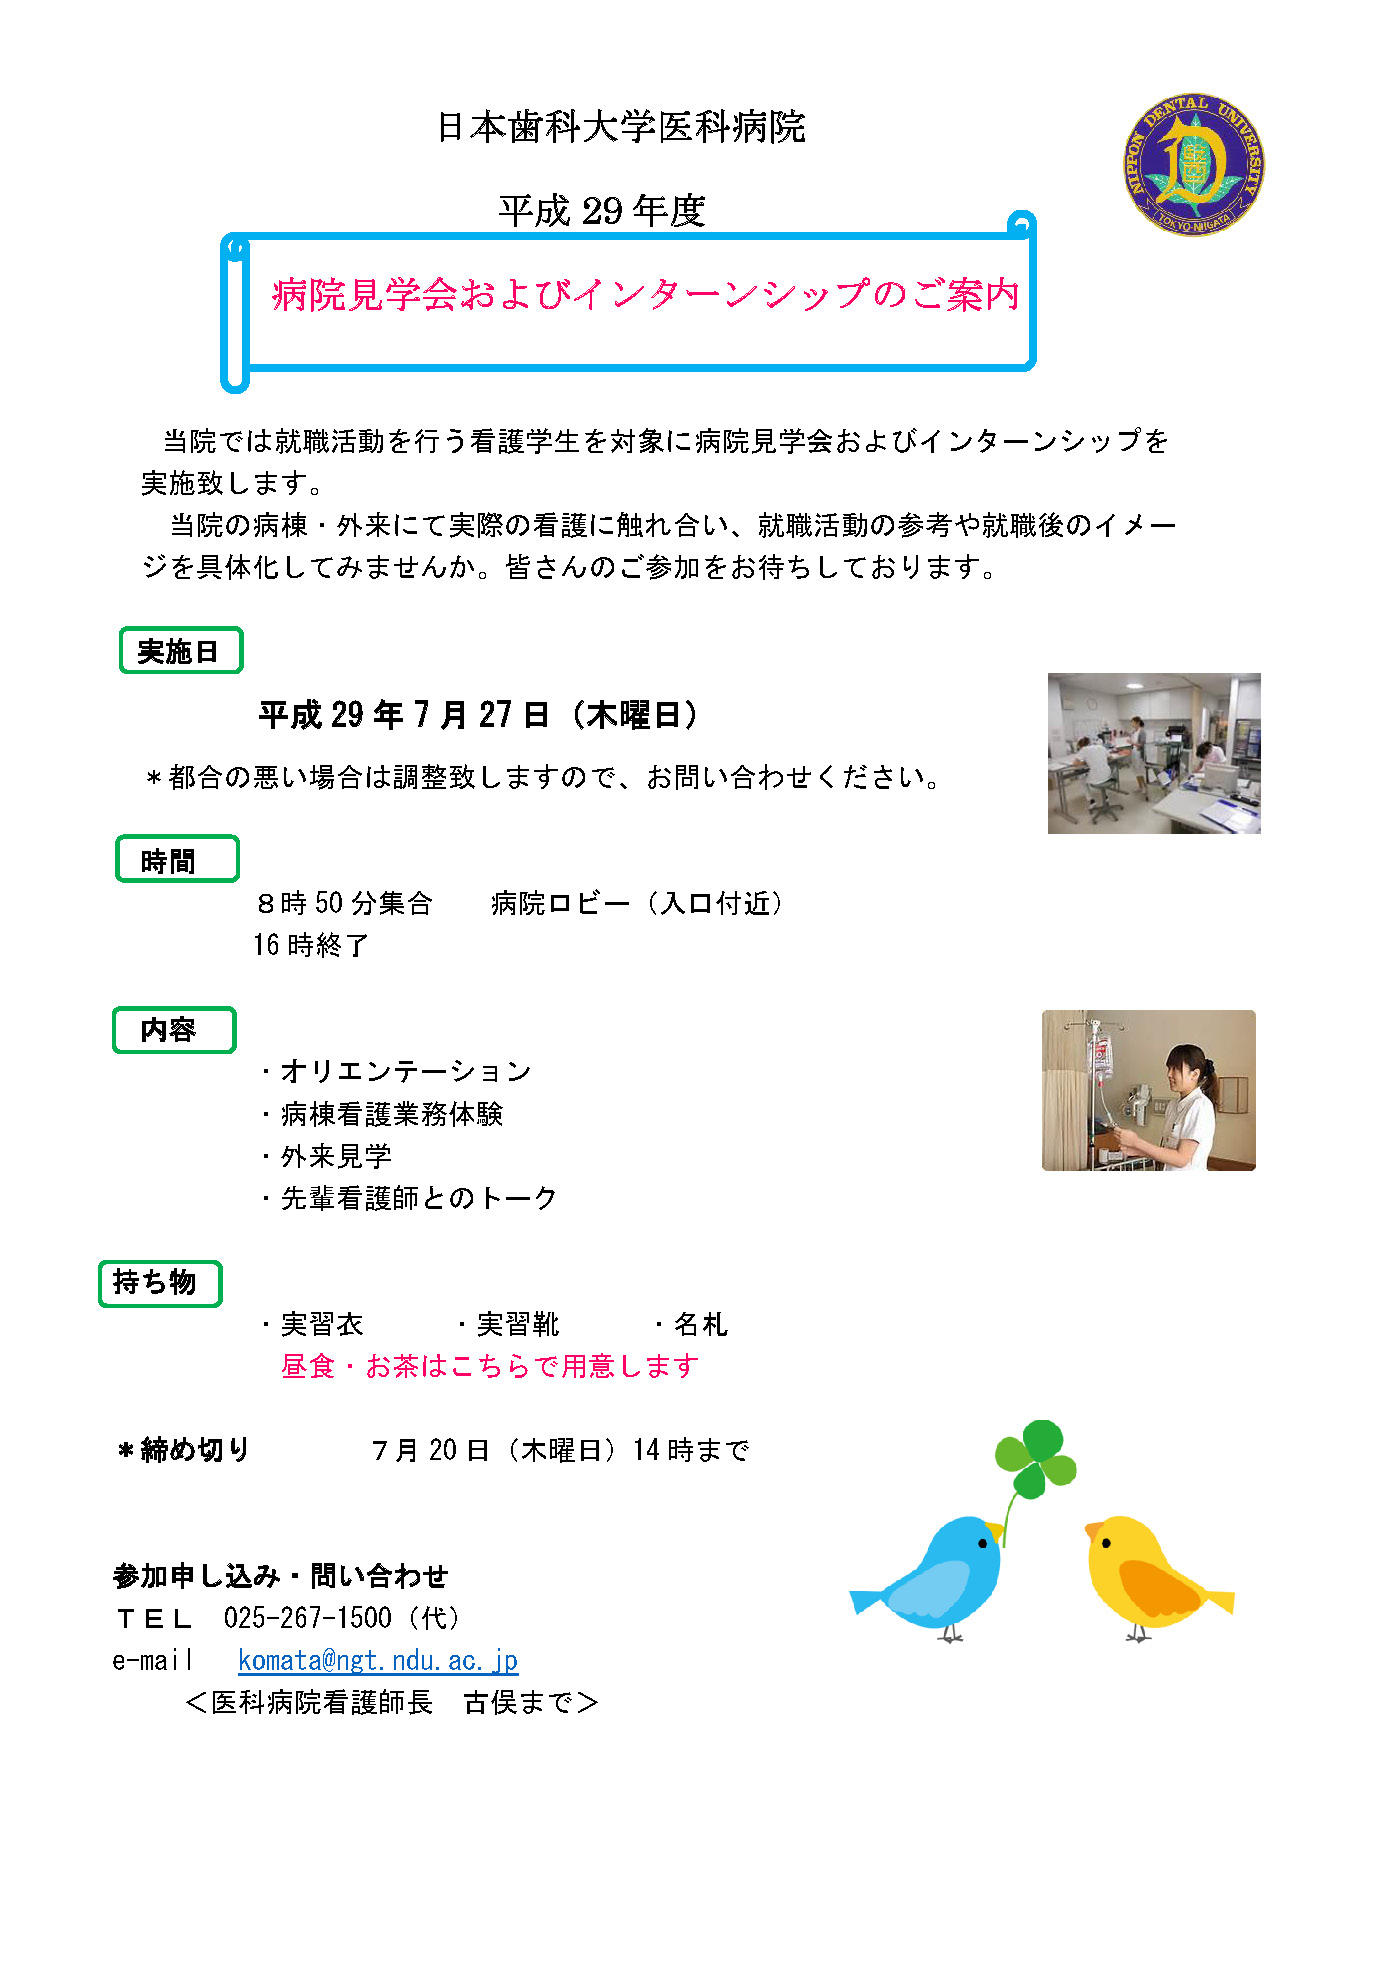 http://www.ngt.ndu.ac.jp/hospital/medical/info/internship2017.jpg